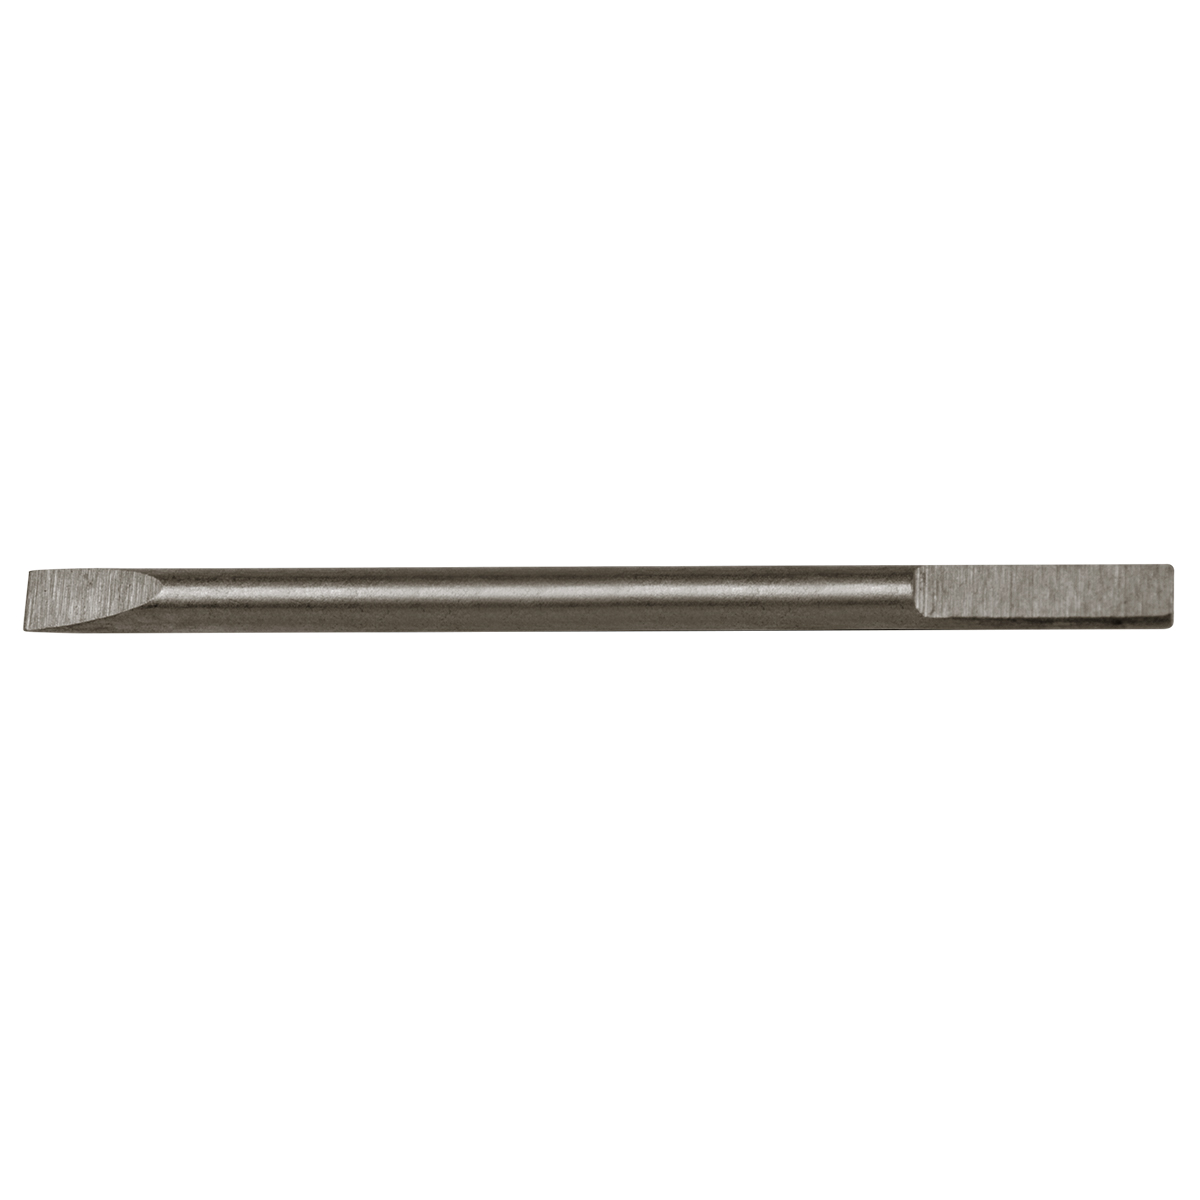 4 Blades for Ergo screwdriver, slot, 1,60 mm, standard taper, purple, stainless steel